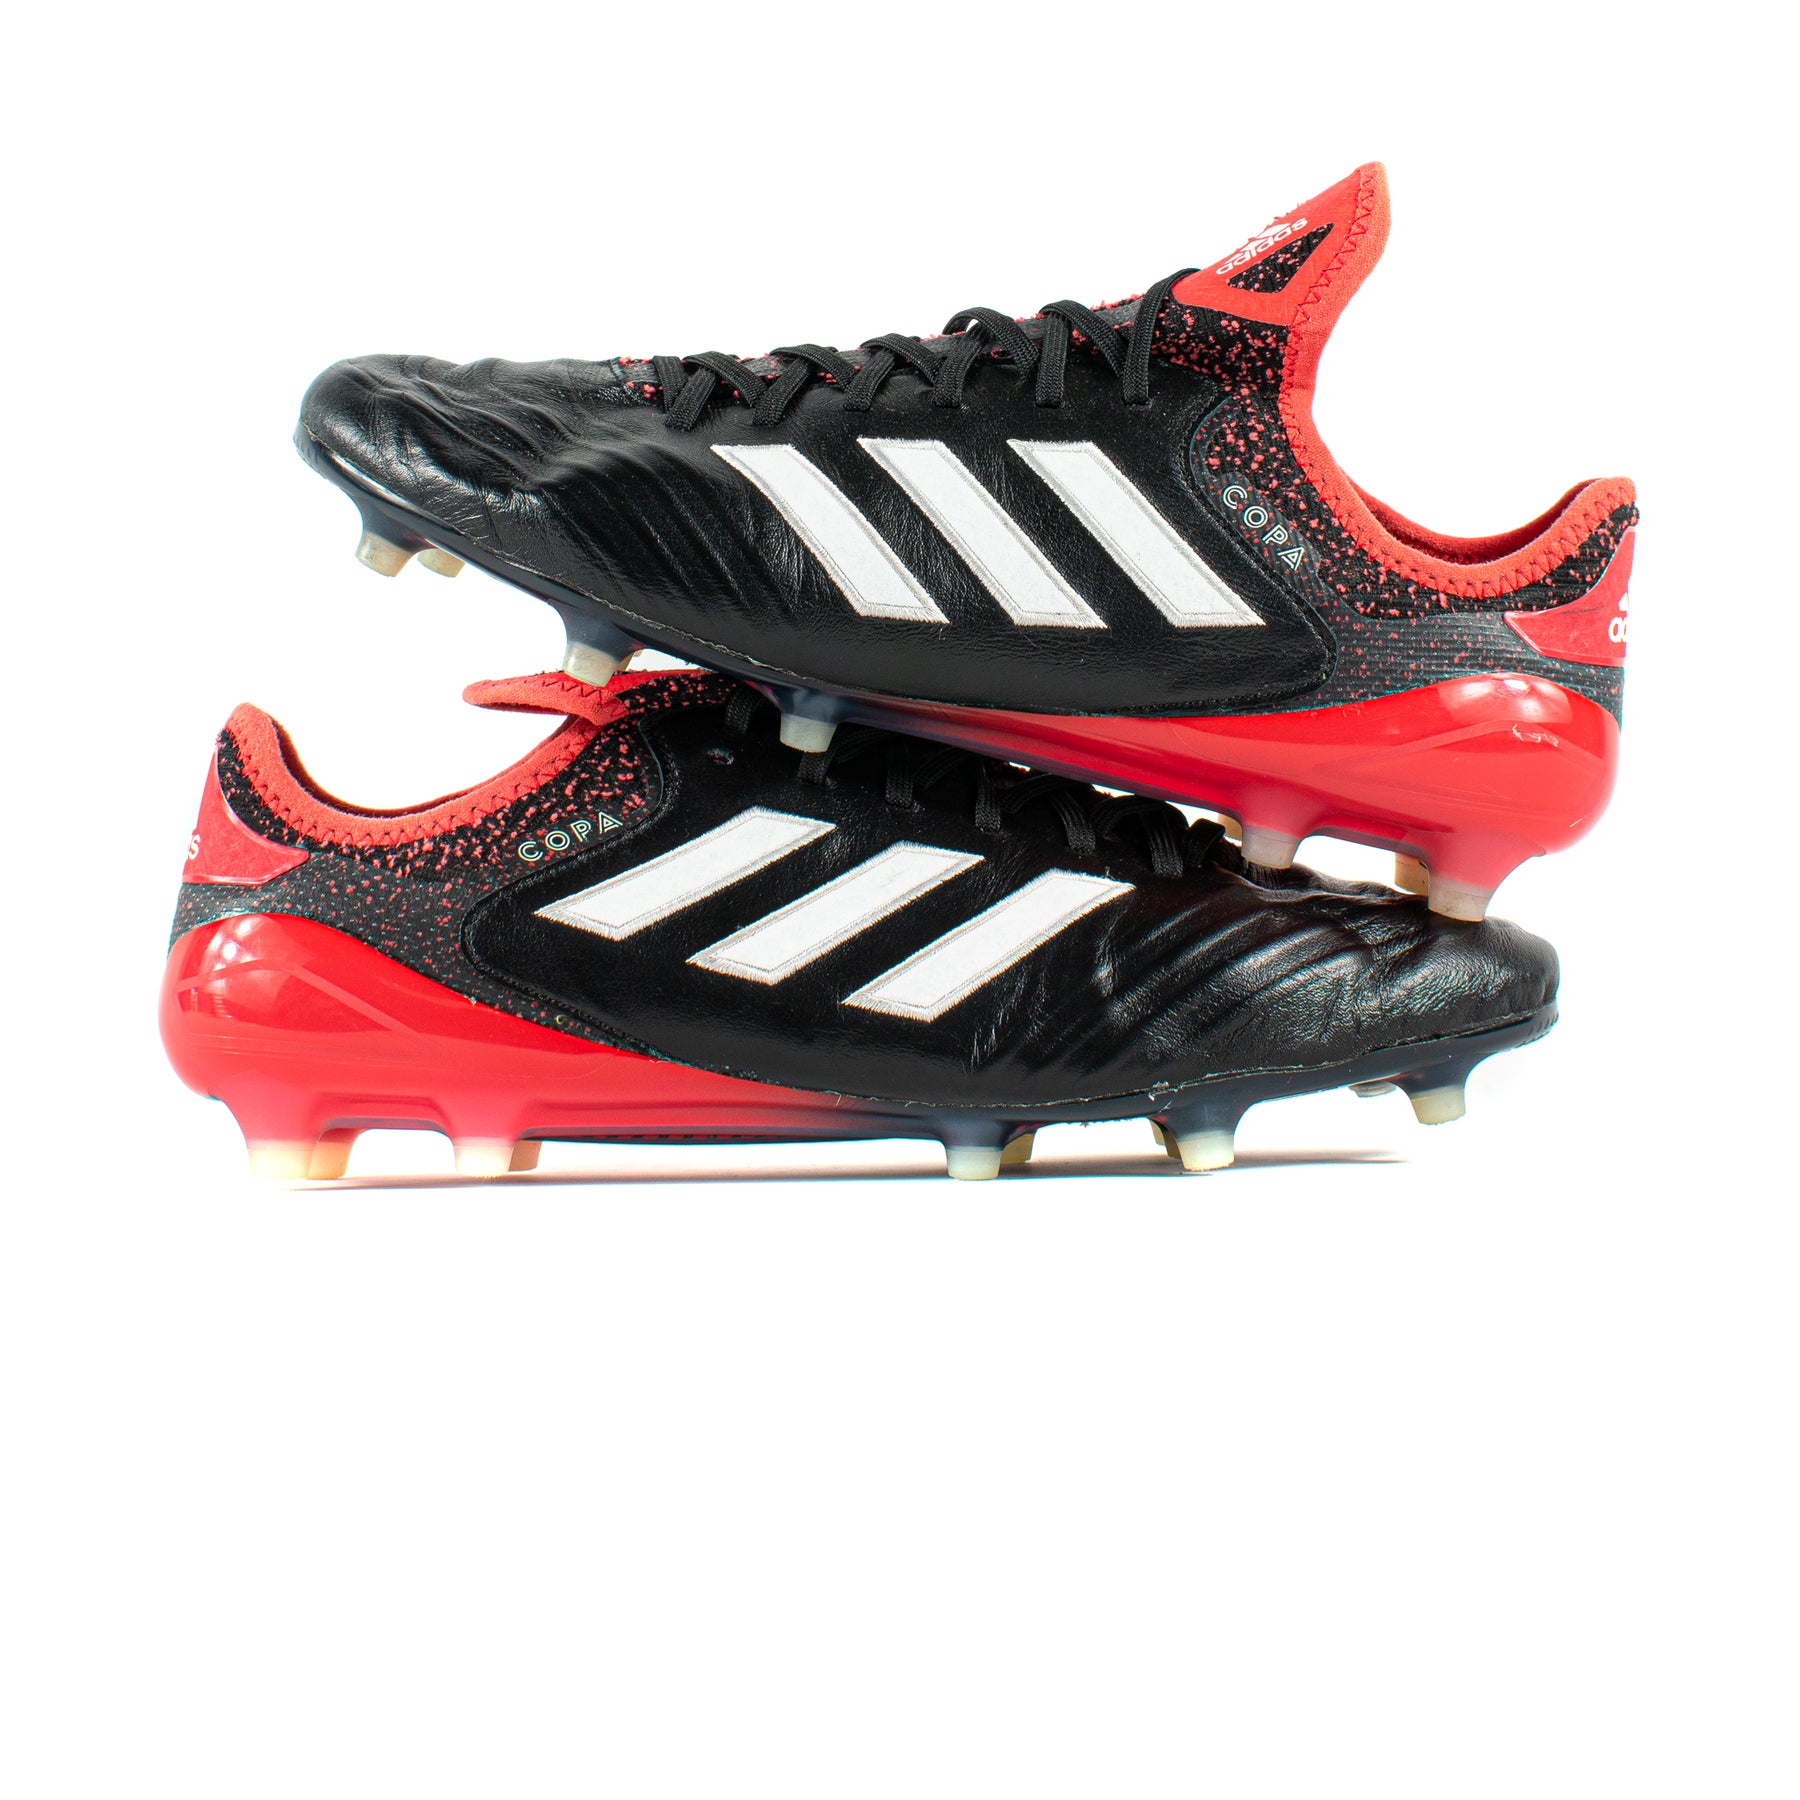 Adidas Copa 18.1 Black *Defect* – Classic Soccer